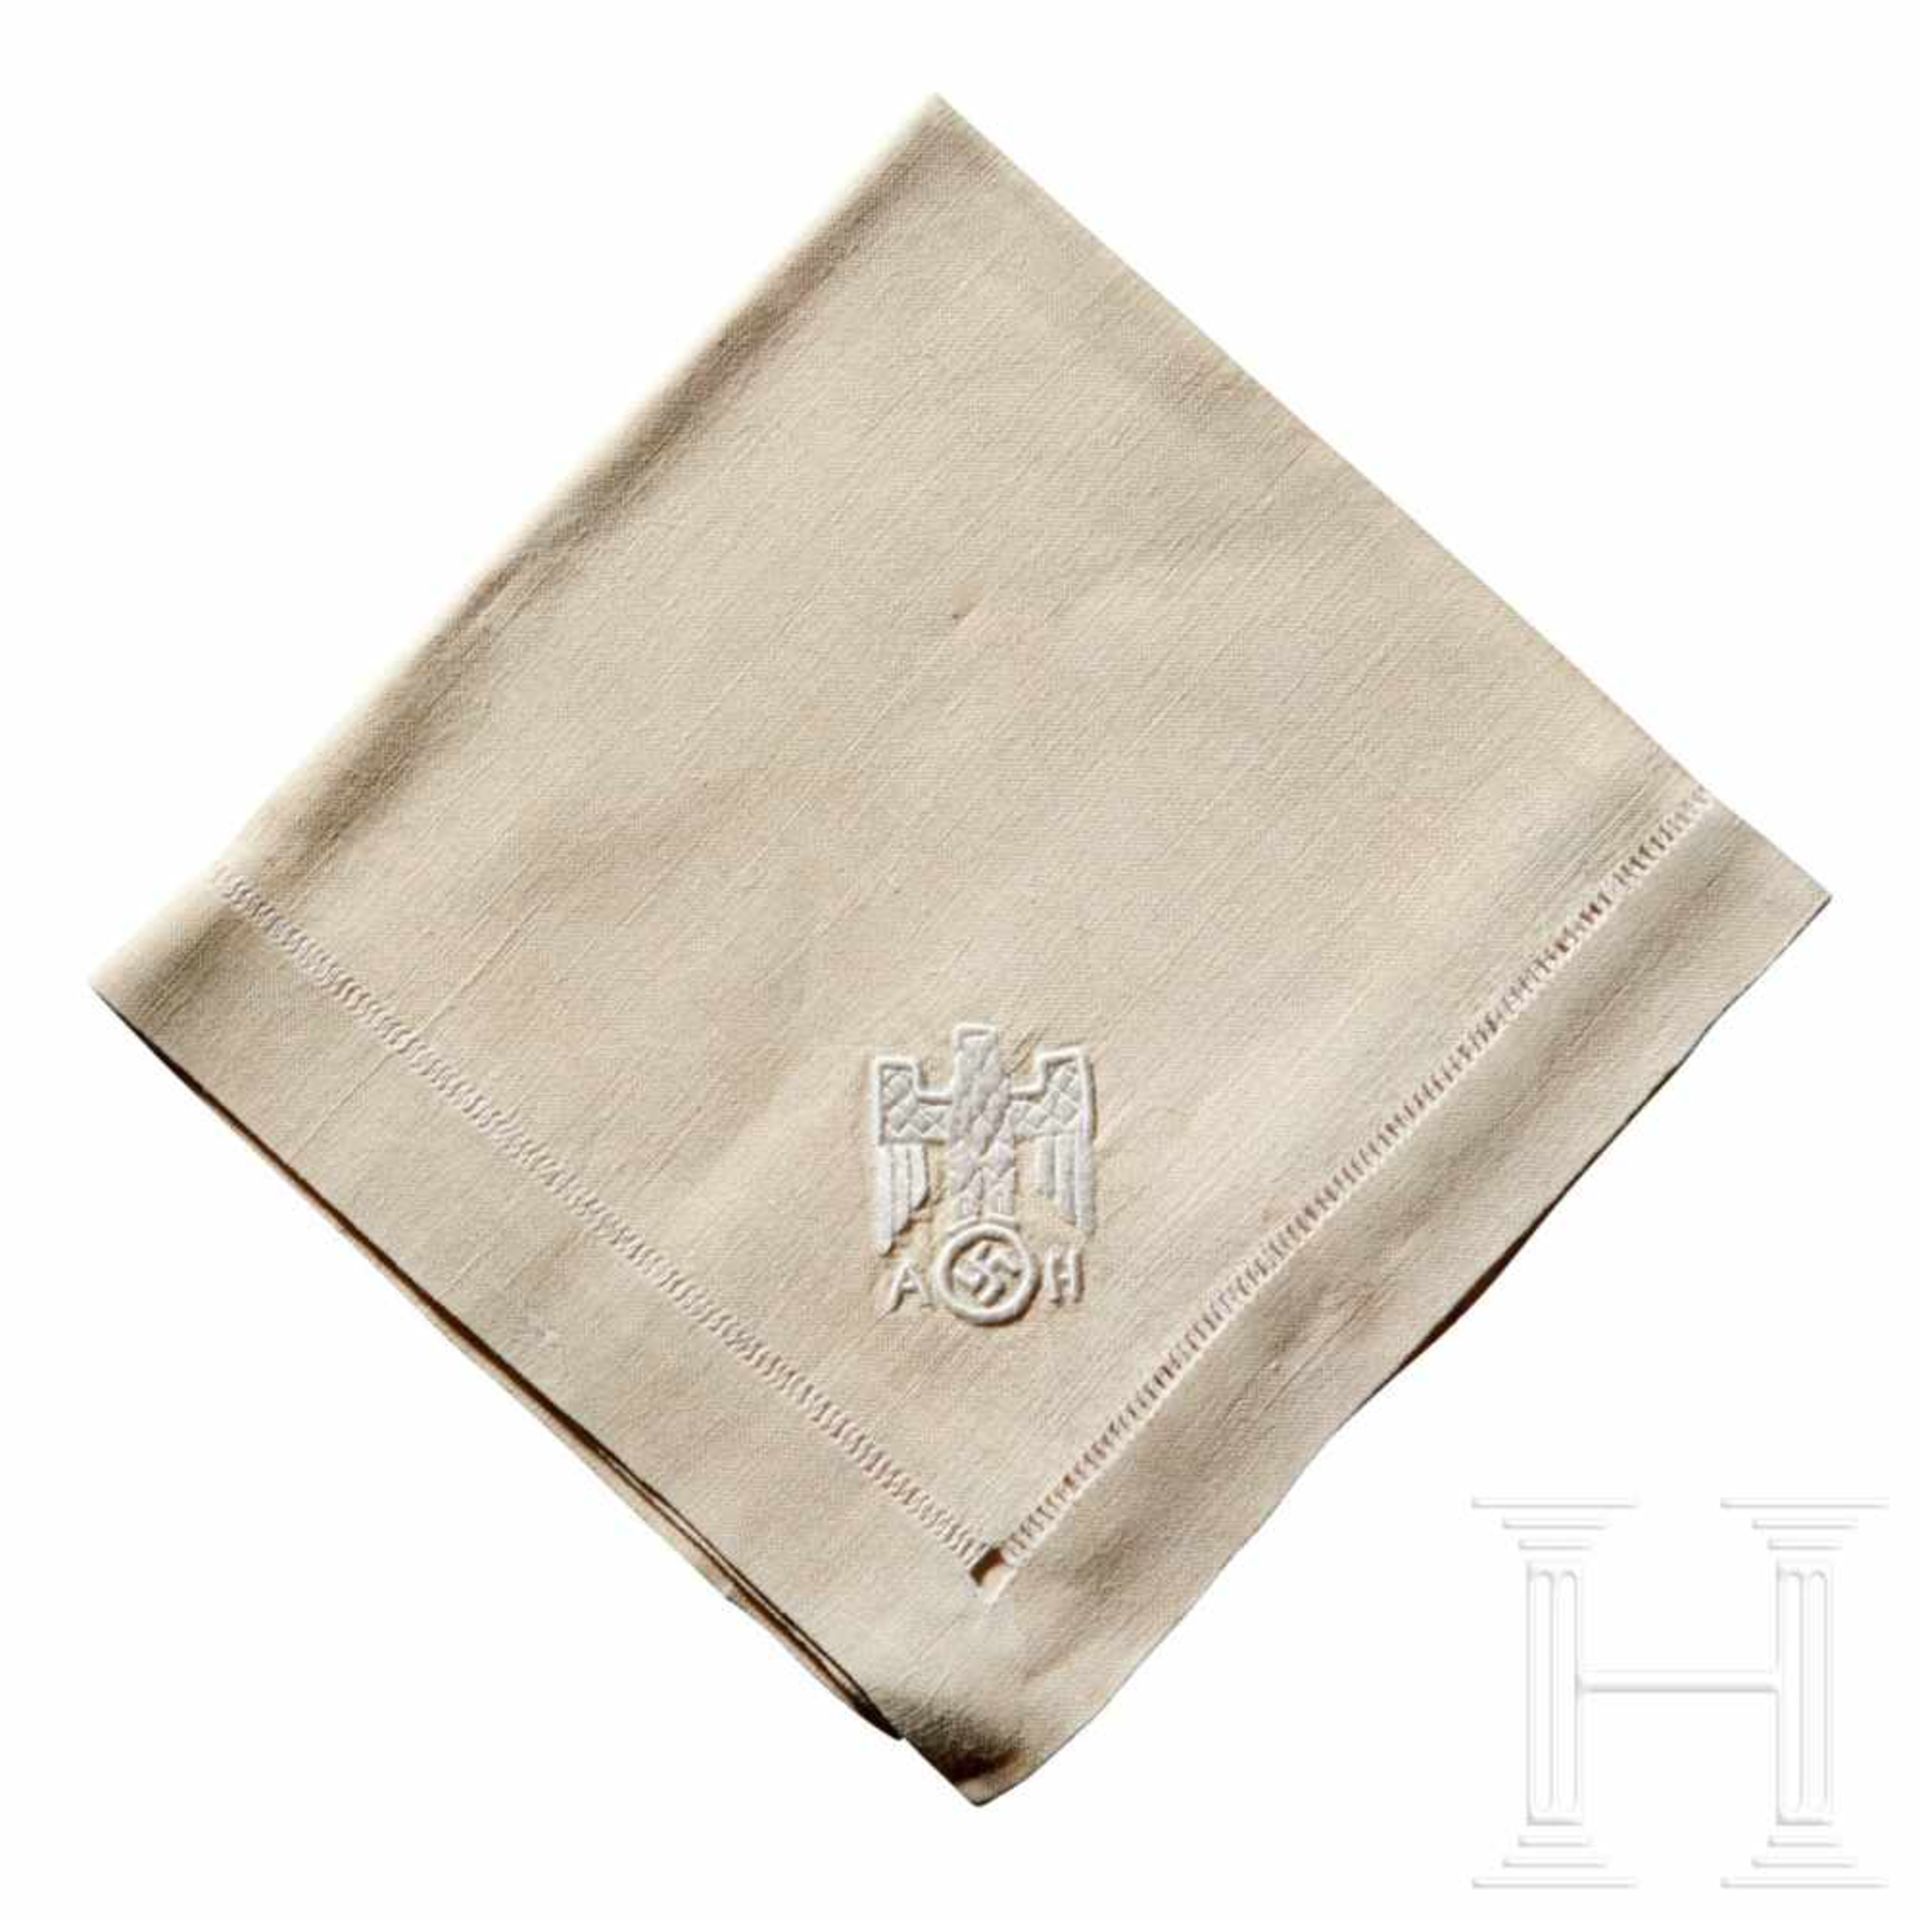 Adolf Hitler – a Napkin from Informal Personal Table ServiceCream color cloth linen napkin with